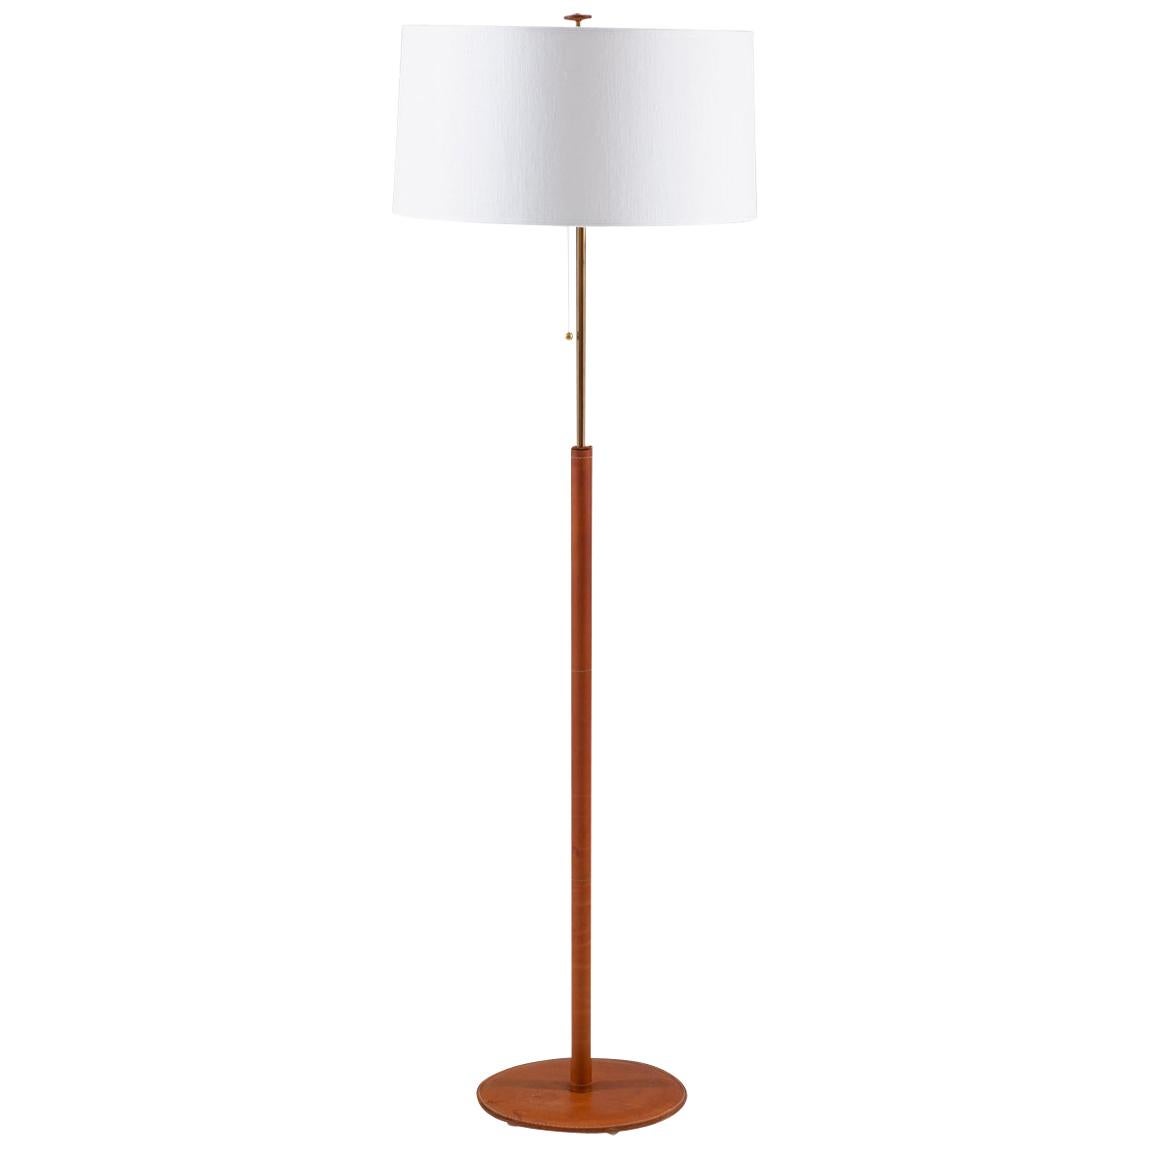 Scandinavian Midcentury Floor Lamp in Brass and Leather by Bergboms, Sweden